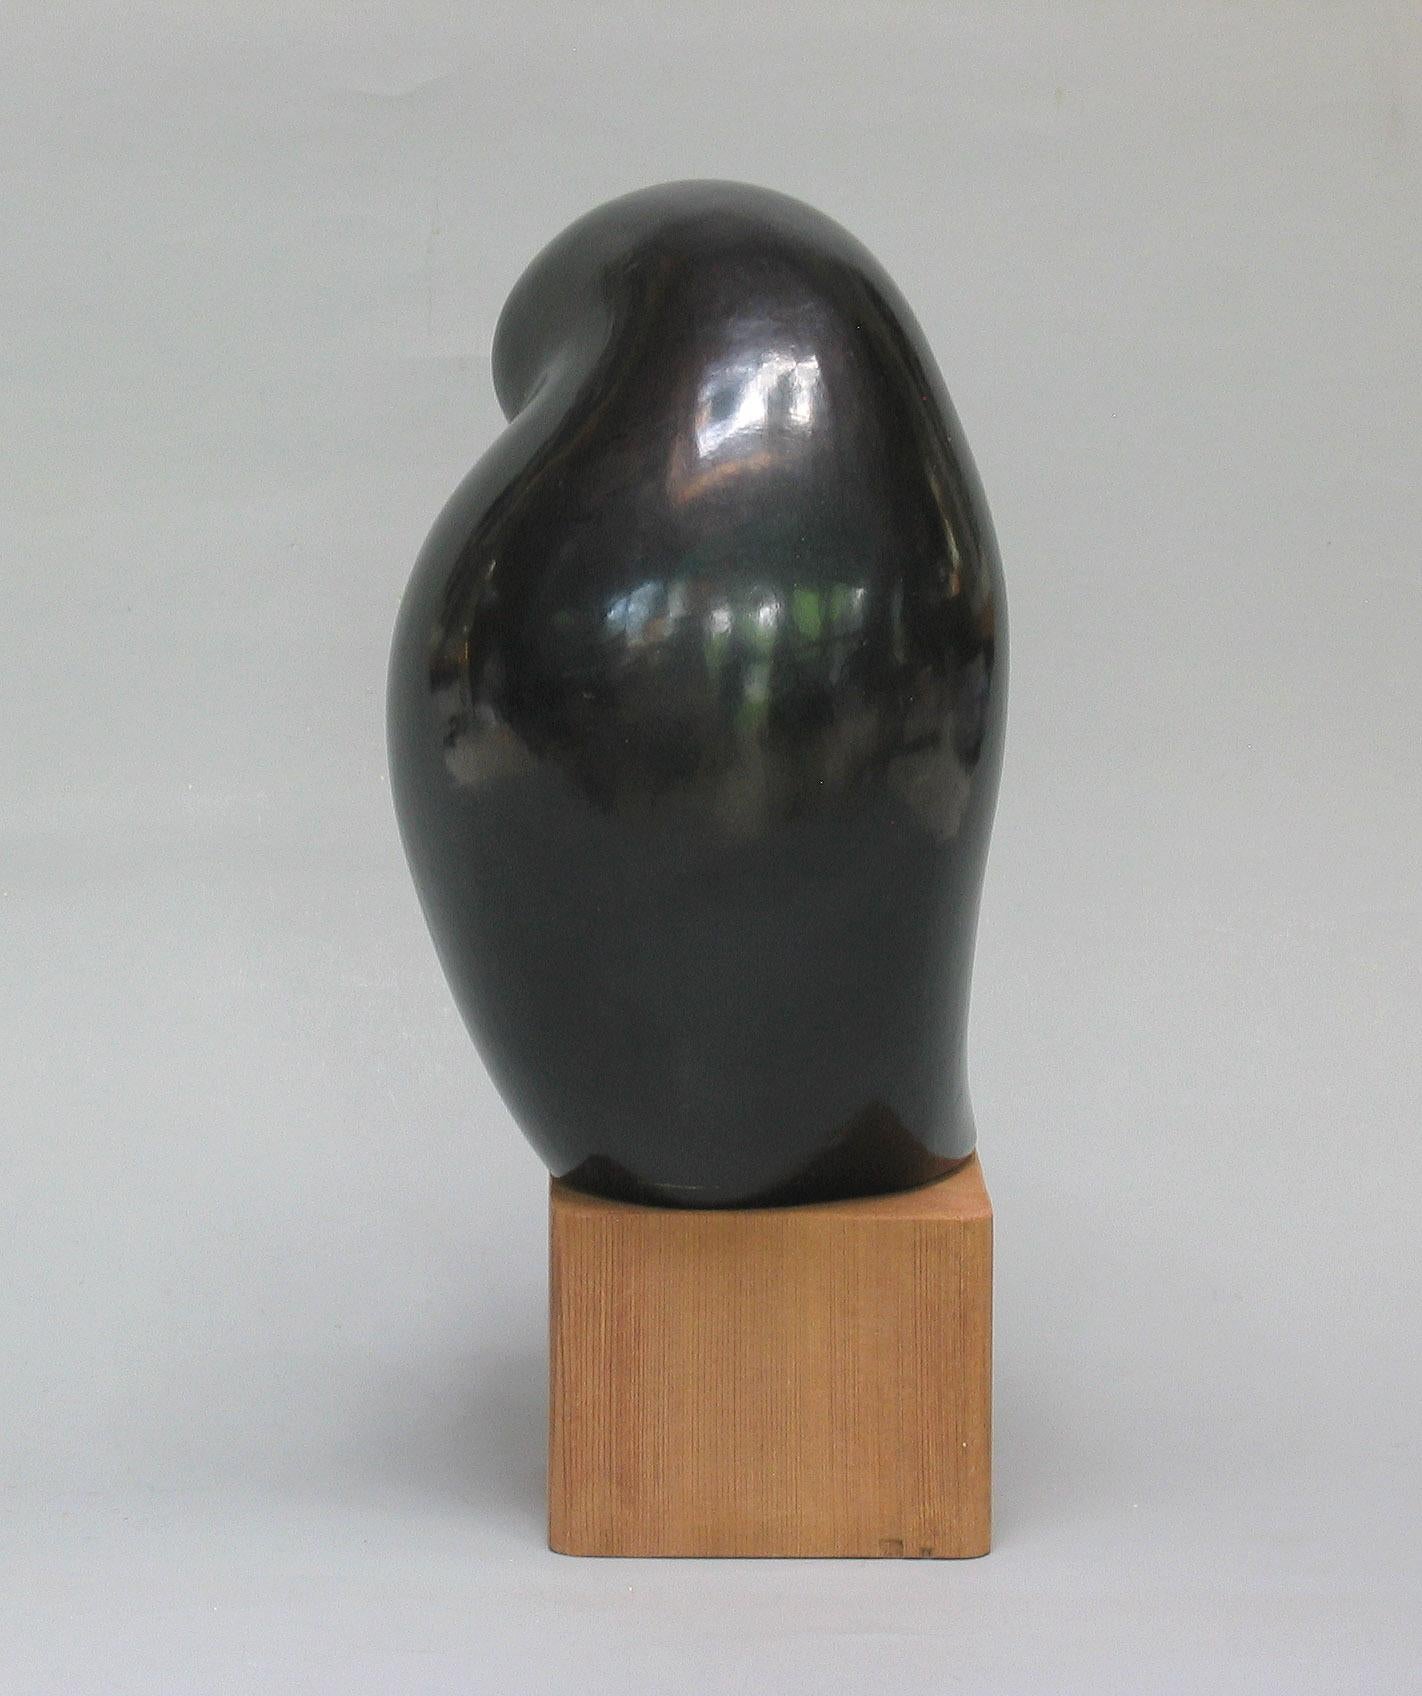 Mexican Black Pottery Bird Form Sculpture by Carlos Salas Oaxaca Mexico